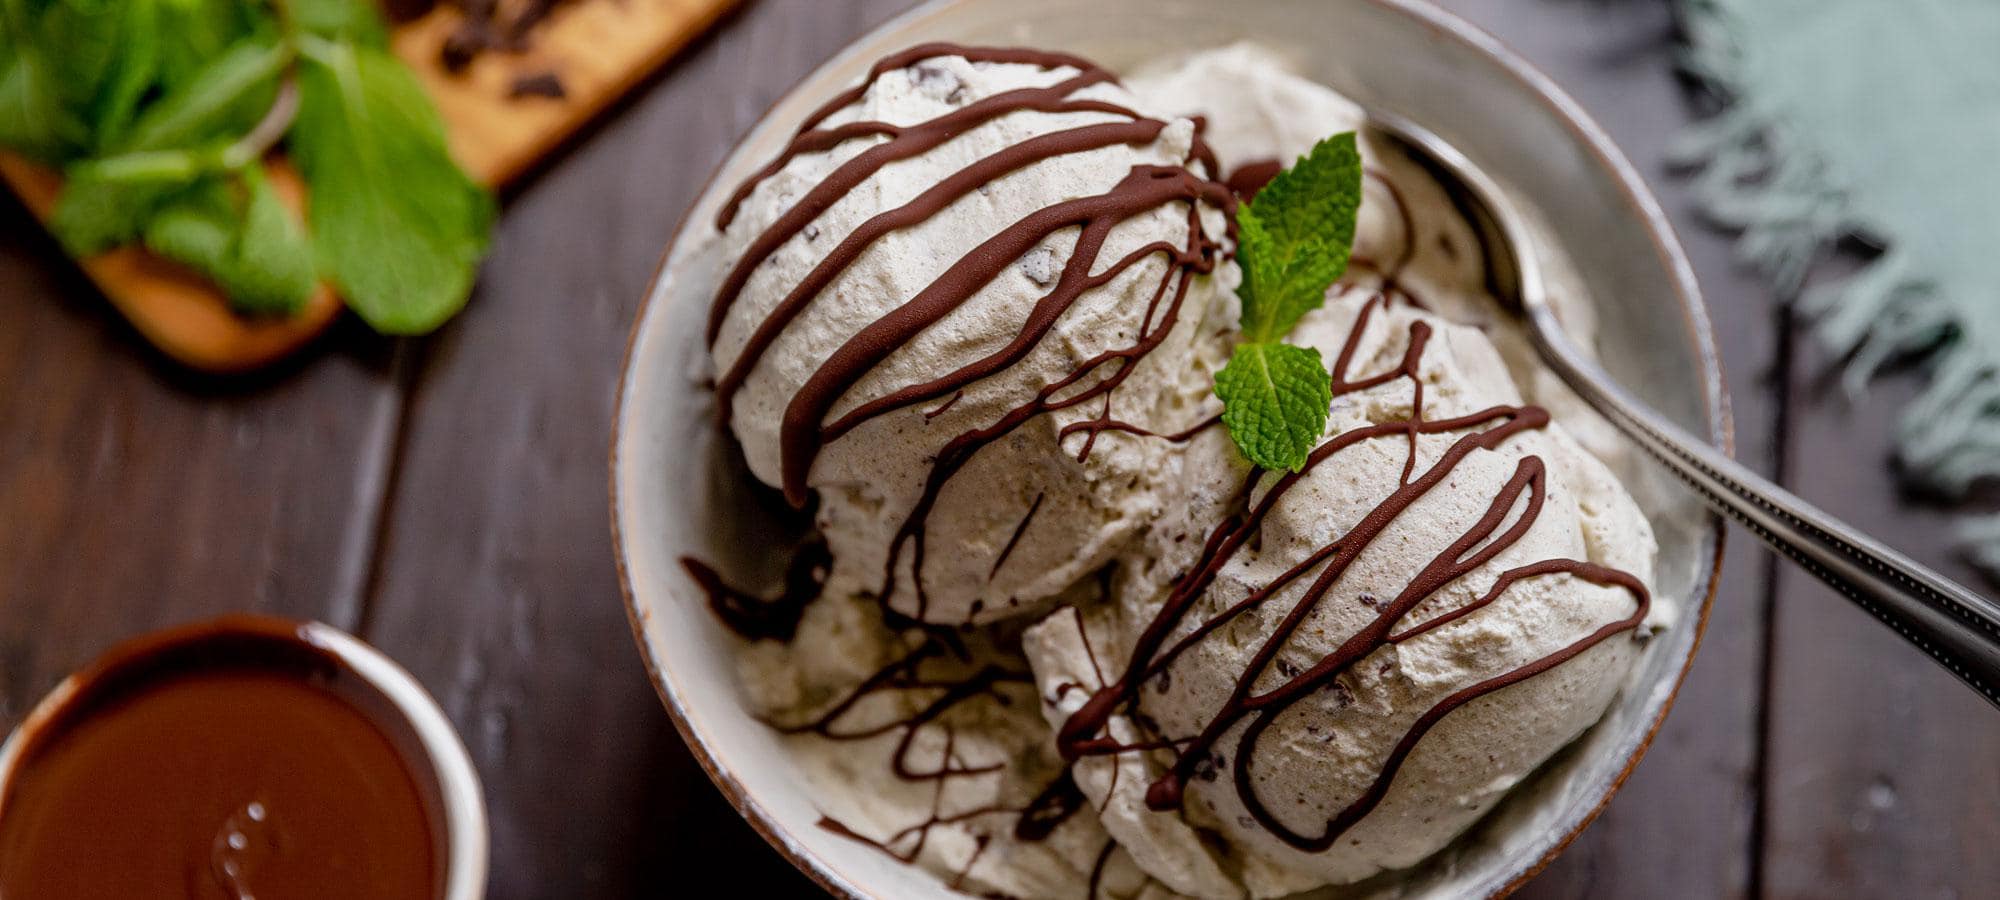 Vegan mint chocolate chip ice cream